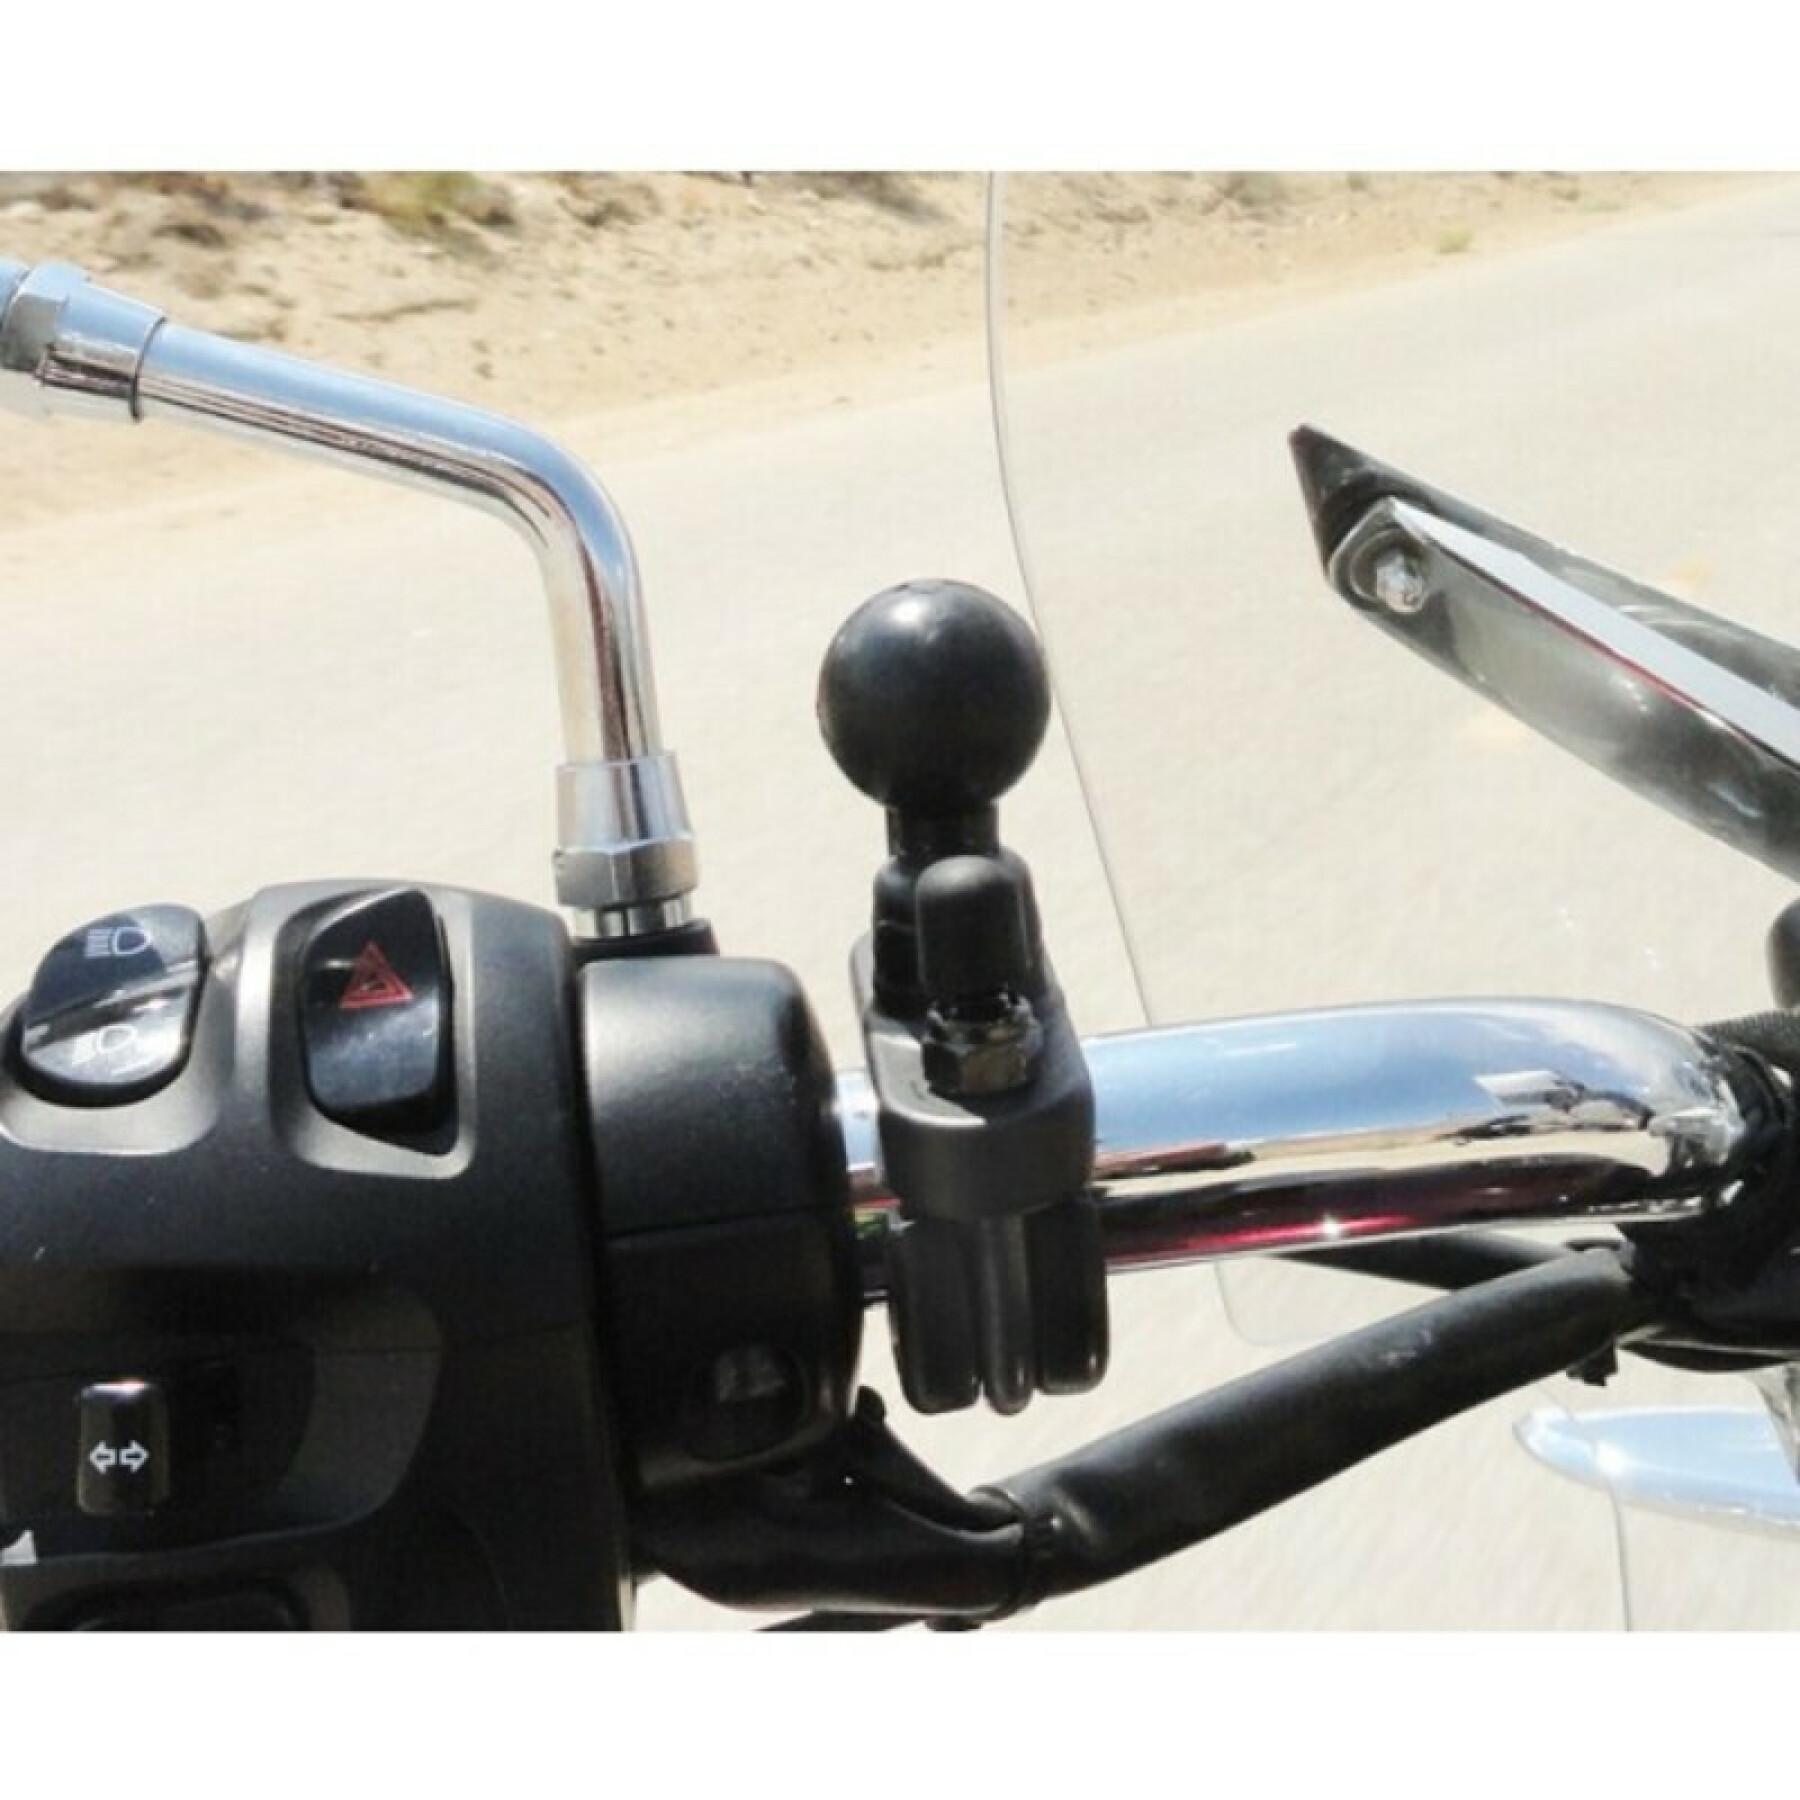 Motorcycle smartphone holder base u-shaped fixing on ball tubes b RAM Mounts